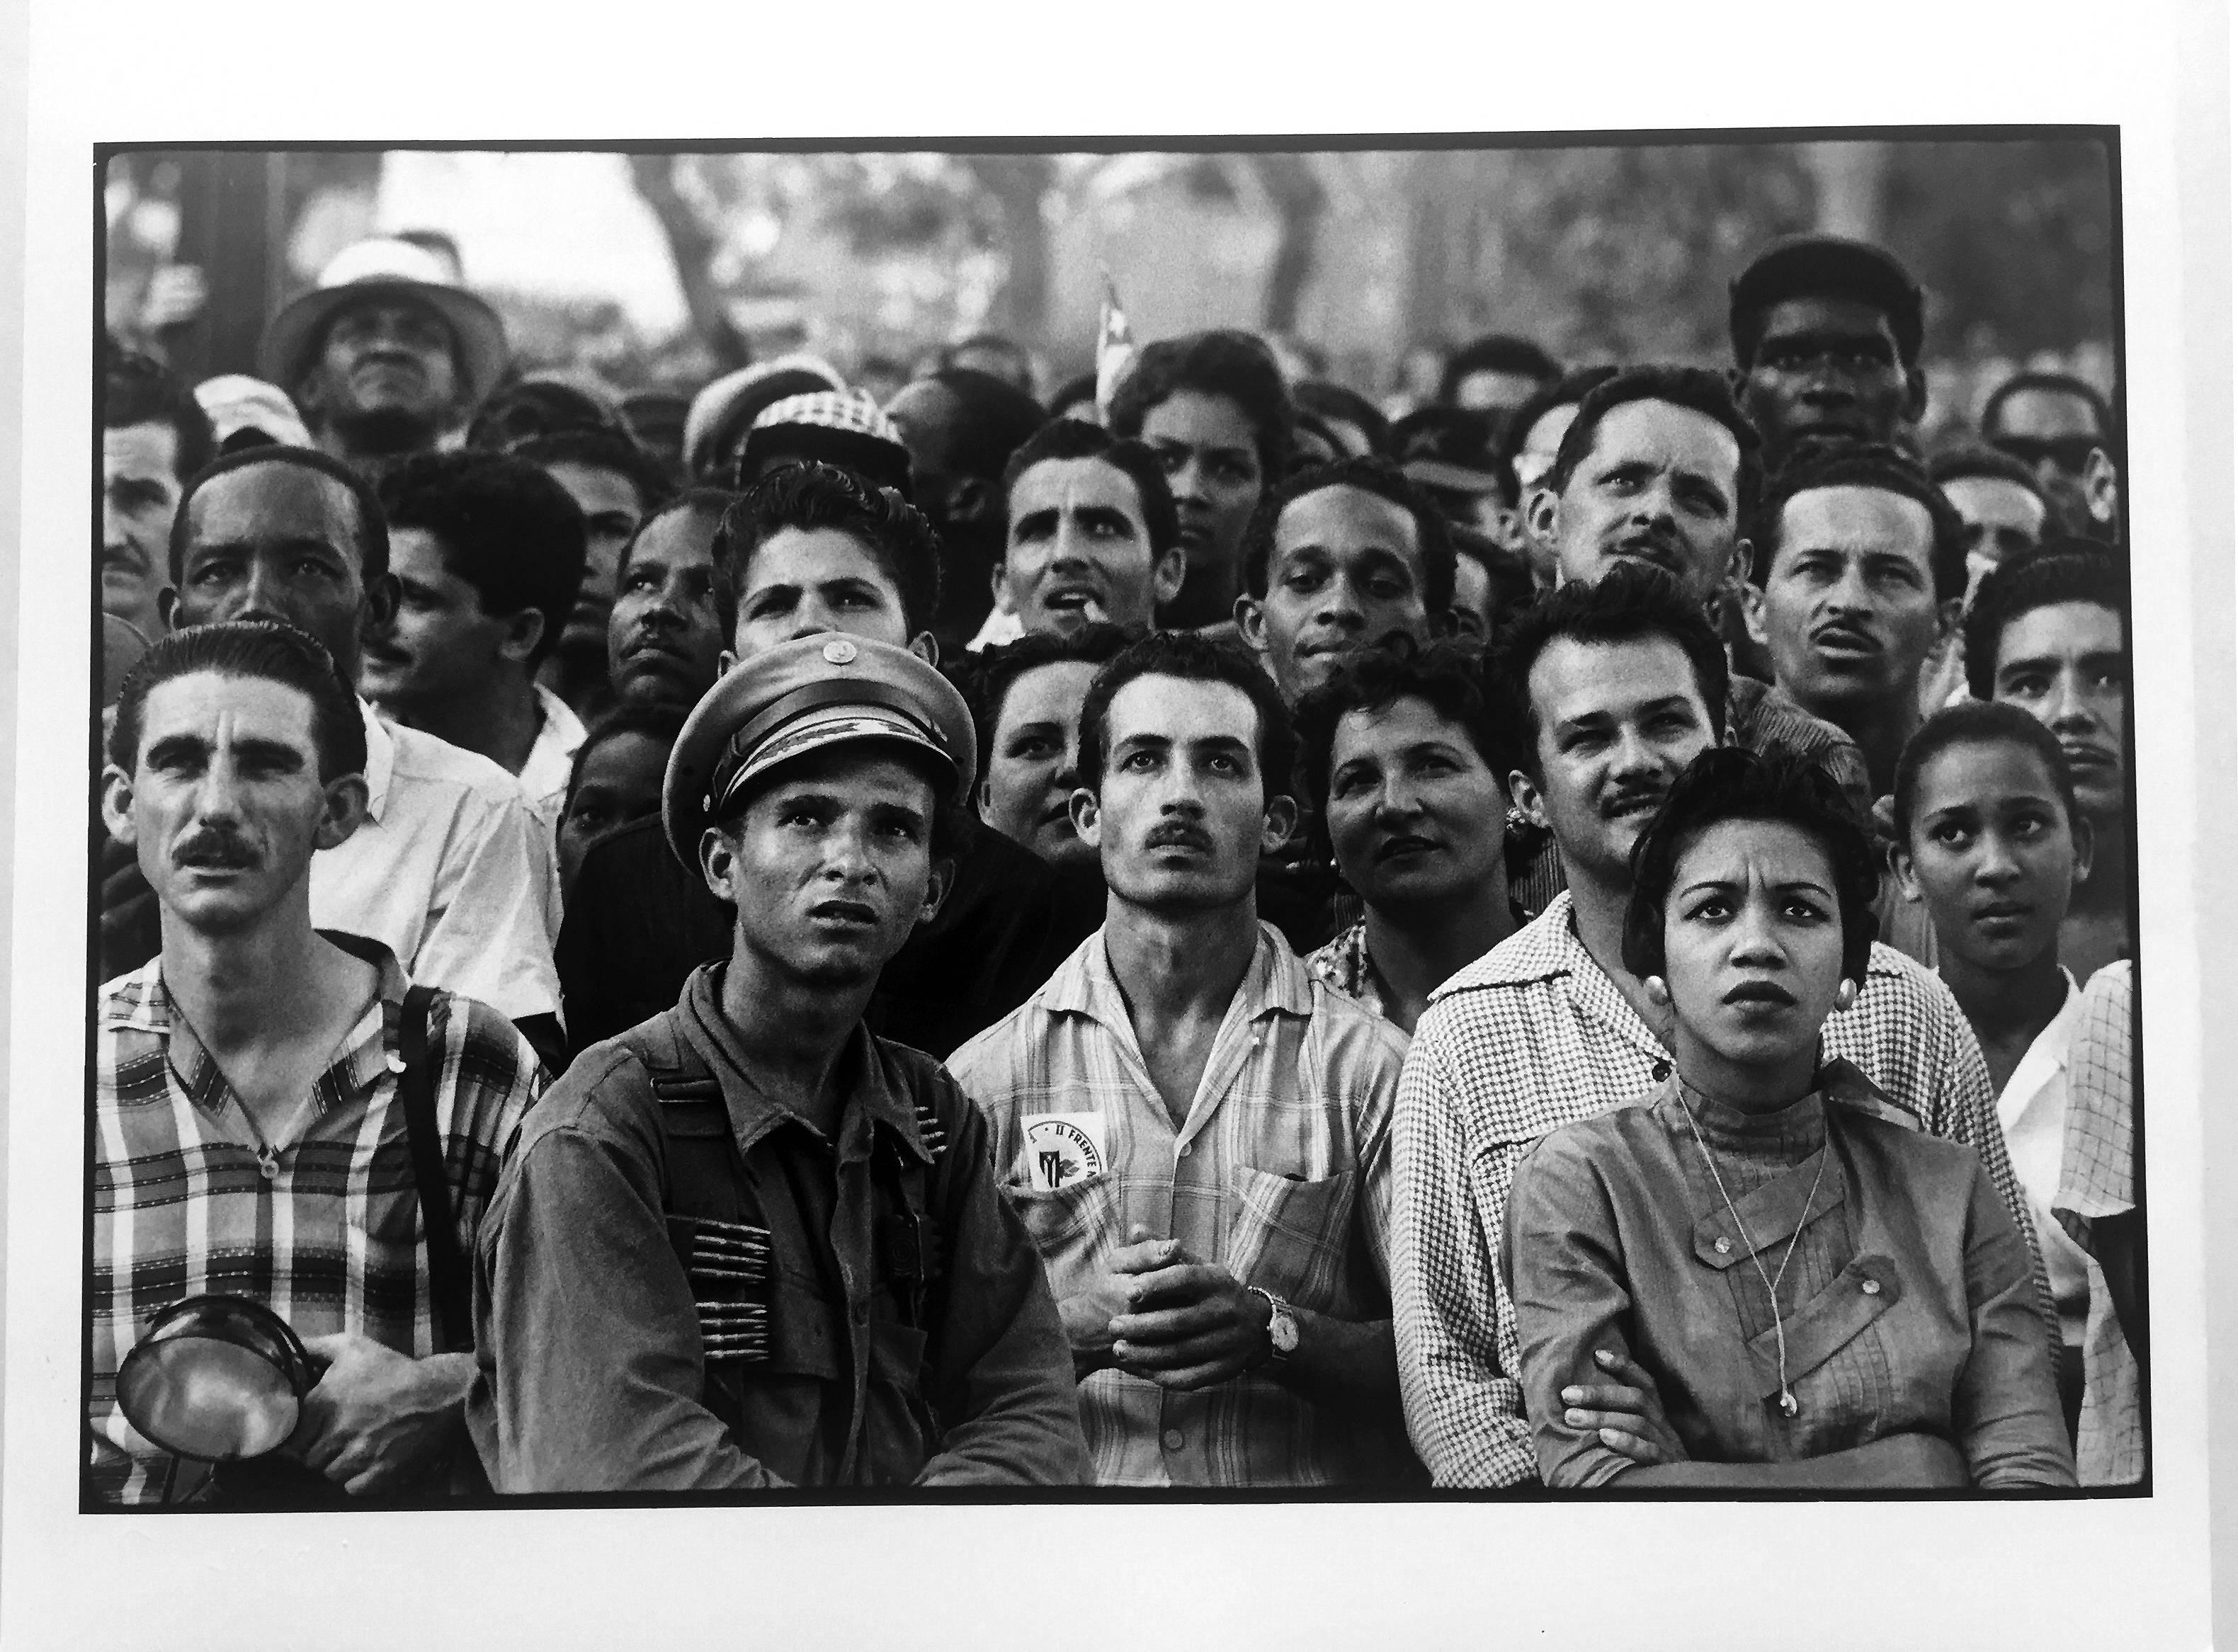 Waiting for Fidel Castro, Havana, Photographs of Cuba 1950s